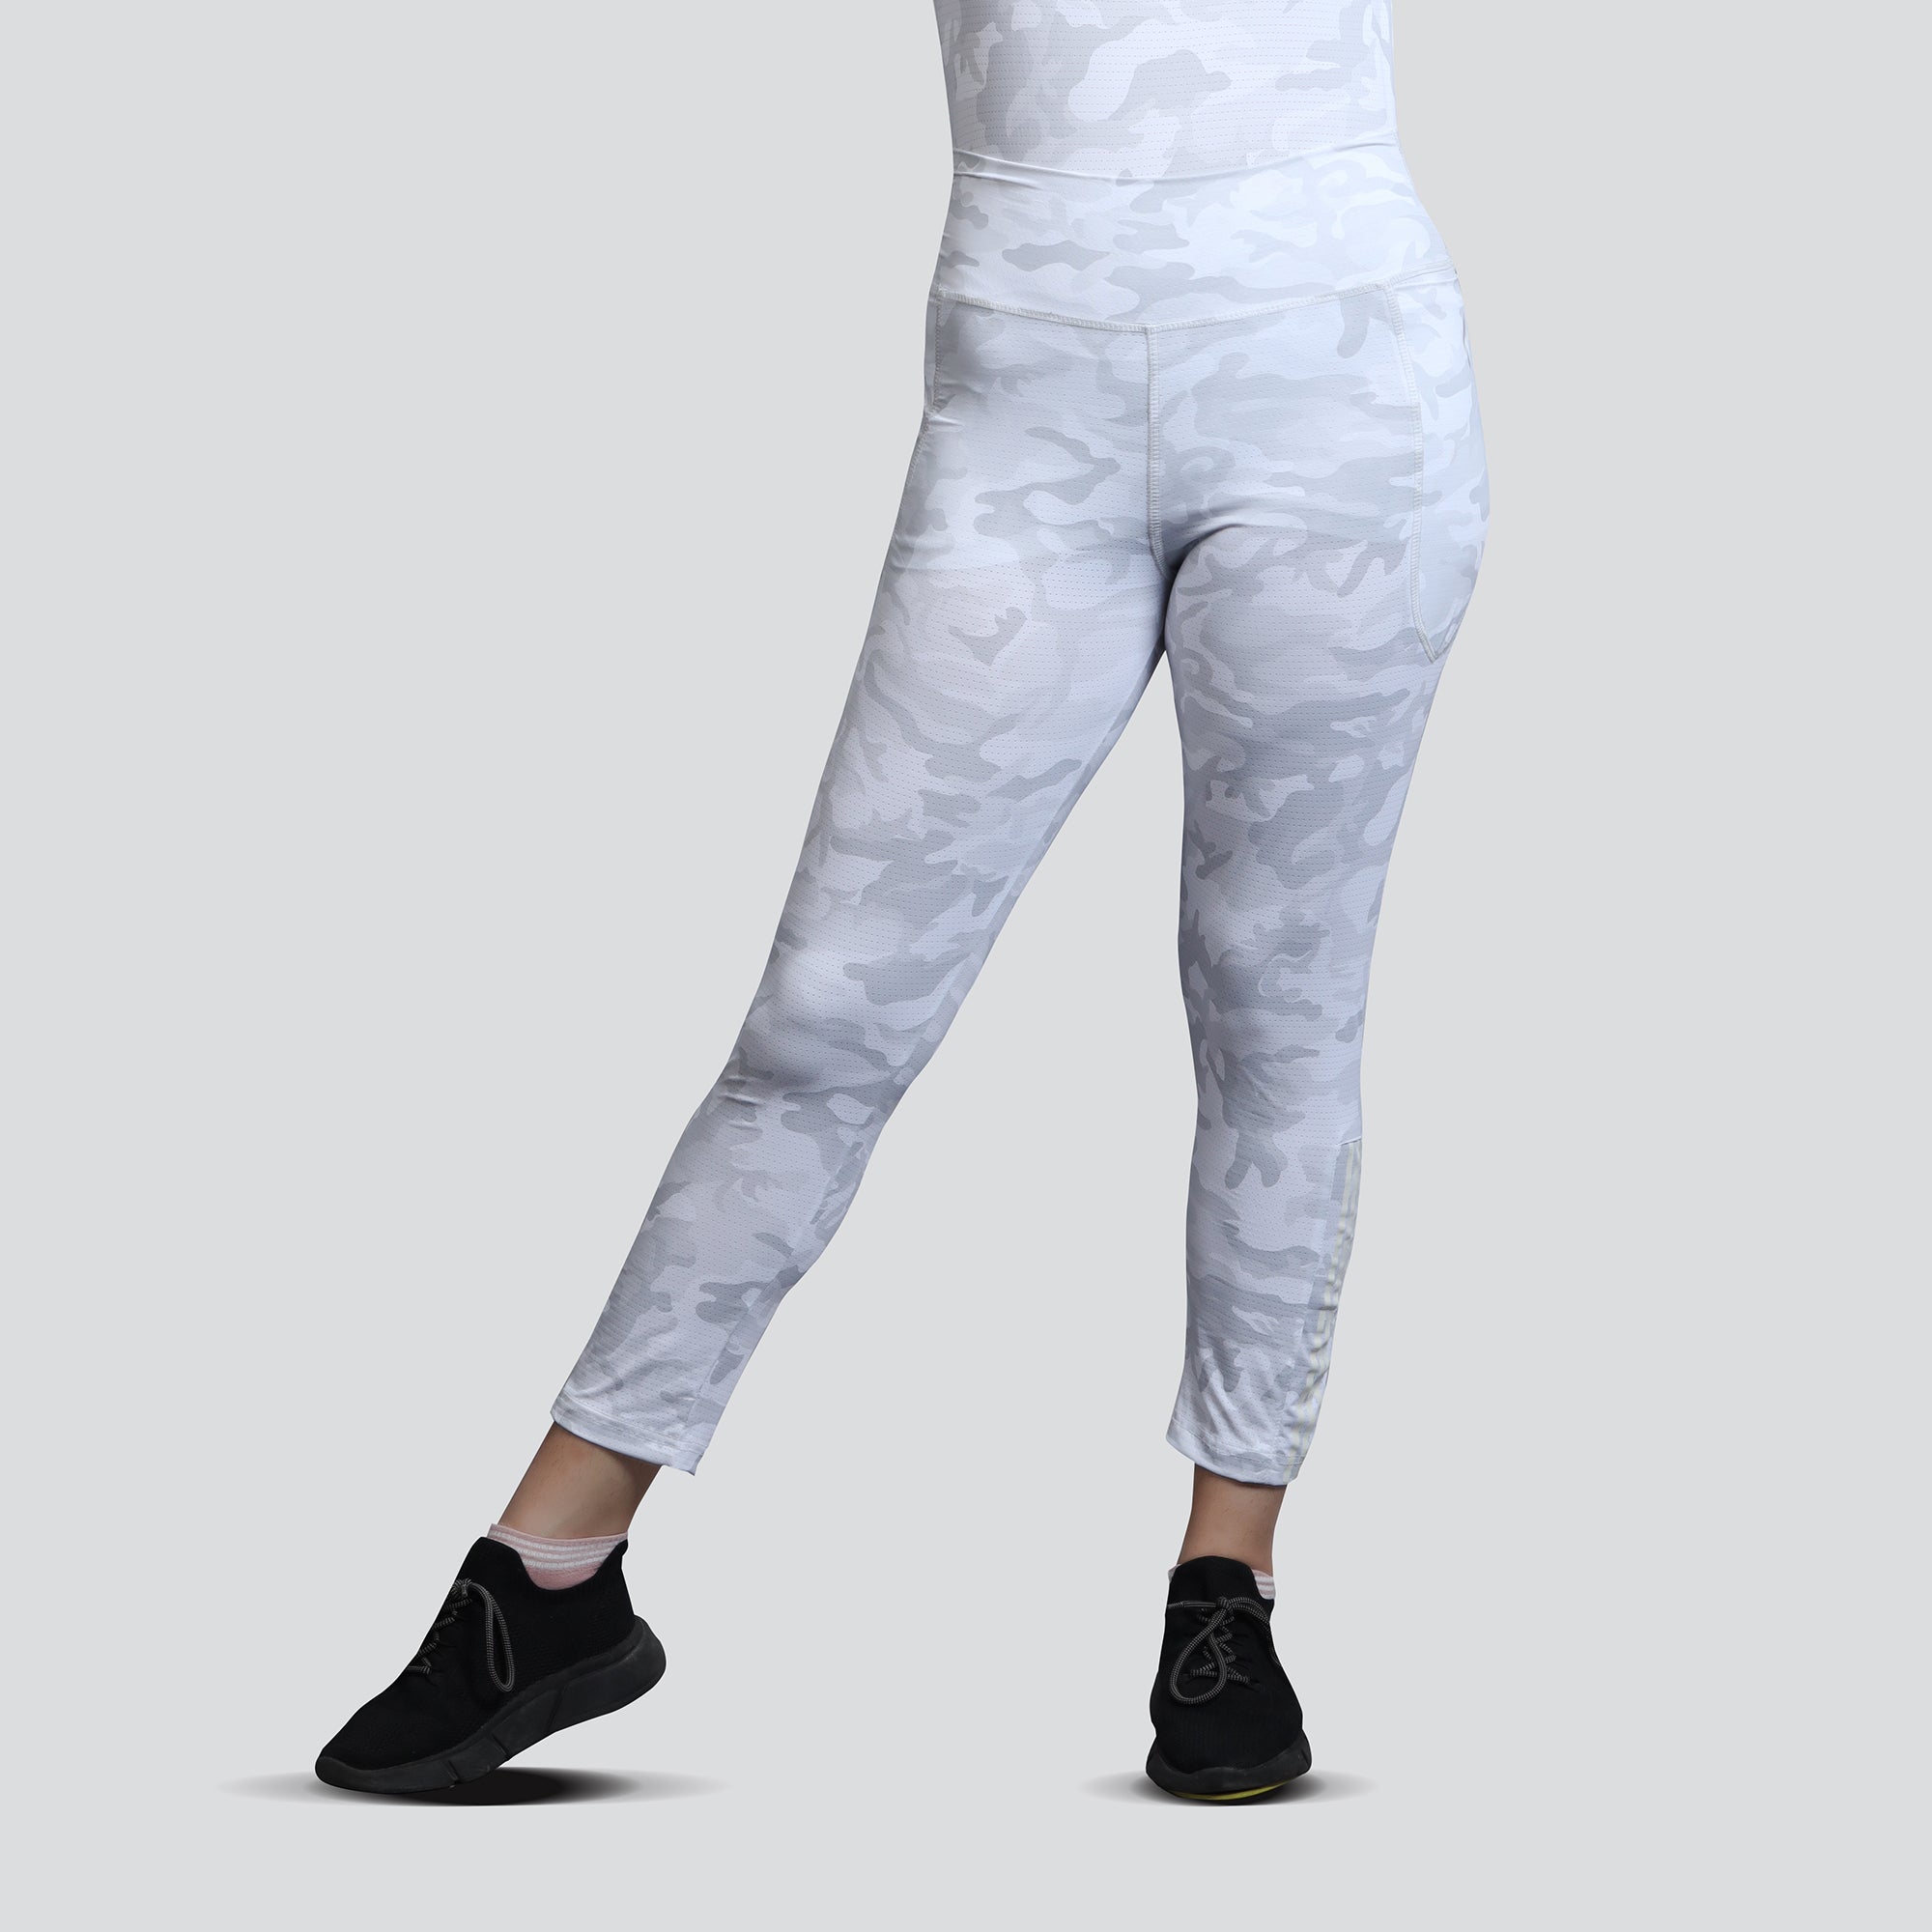 Buy Athletic Womens Yoga Pants Black with Pockets Online – Flush Fashion